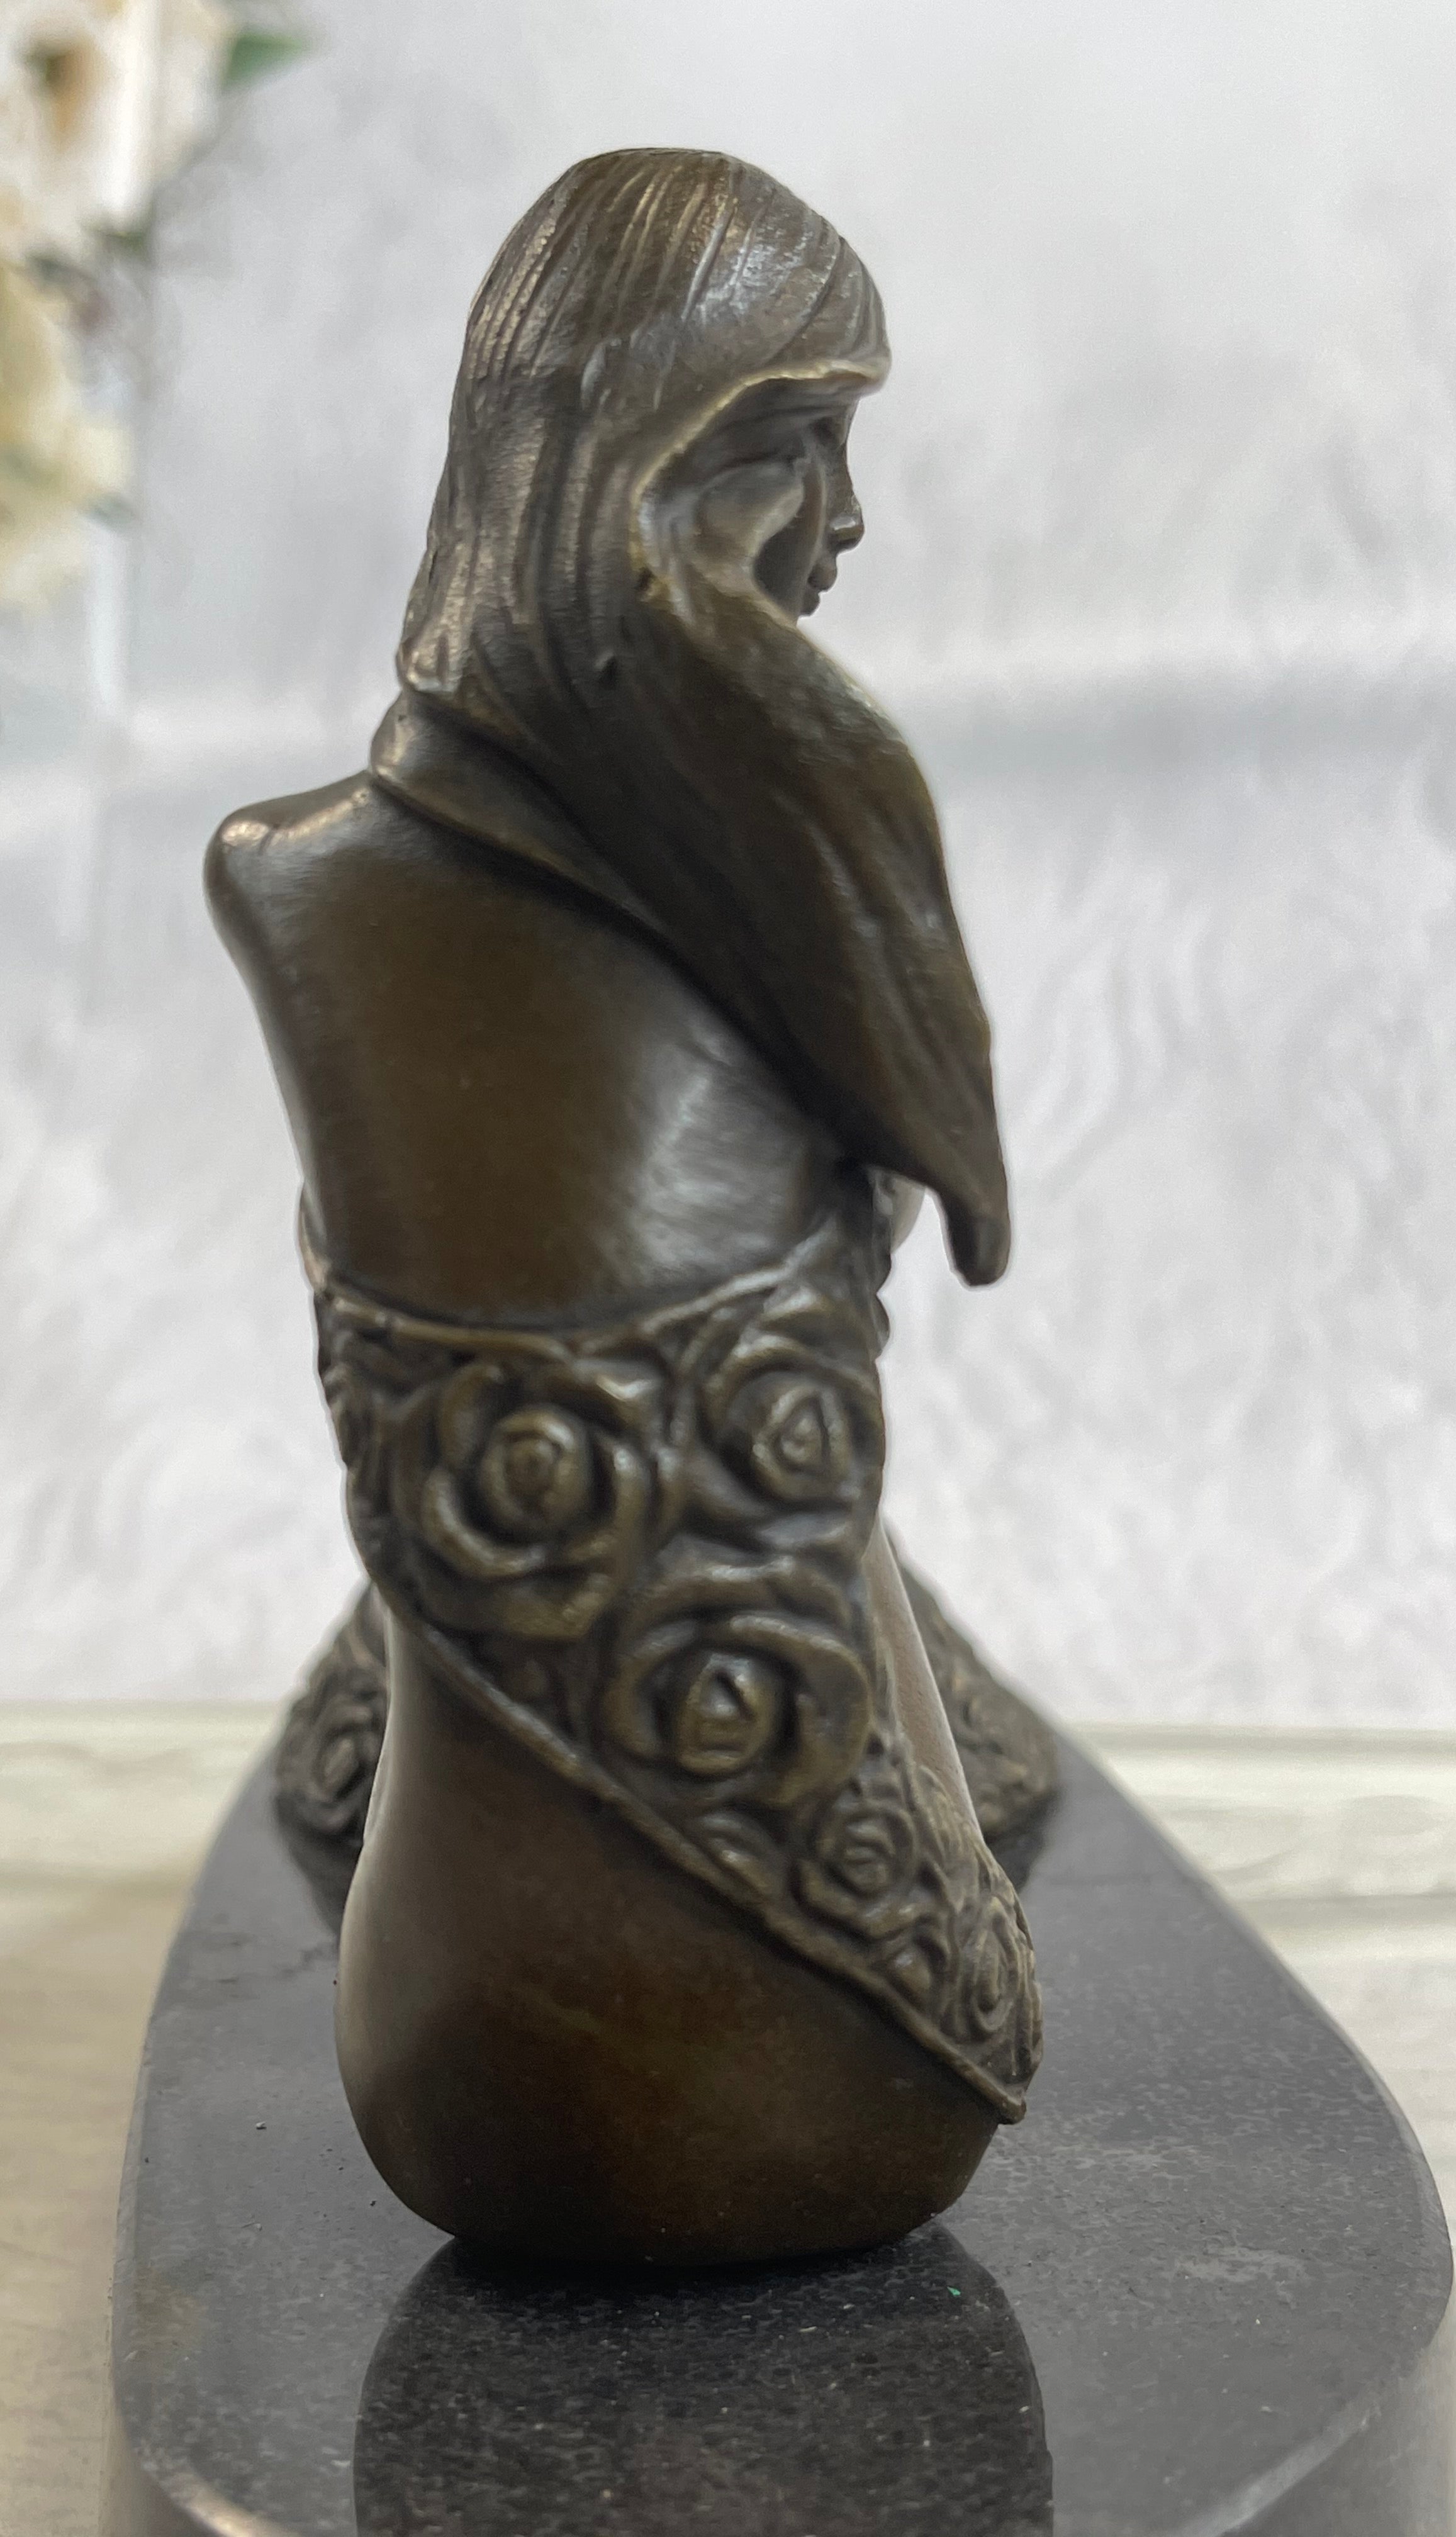 Dreamy Sitting Mermaid Bronze Finish 9.5" Large Sculpture Figure Brown Decorative